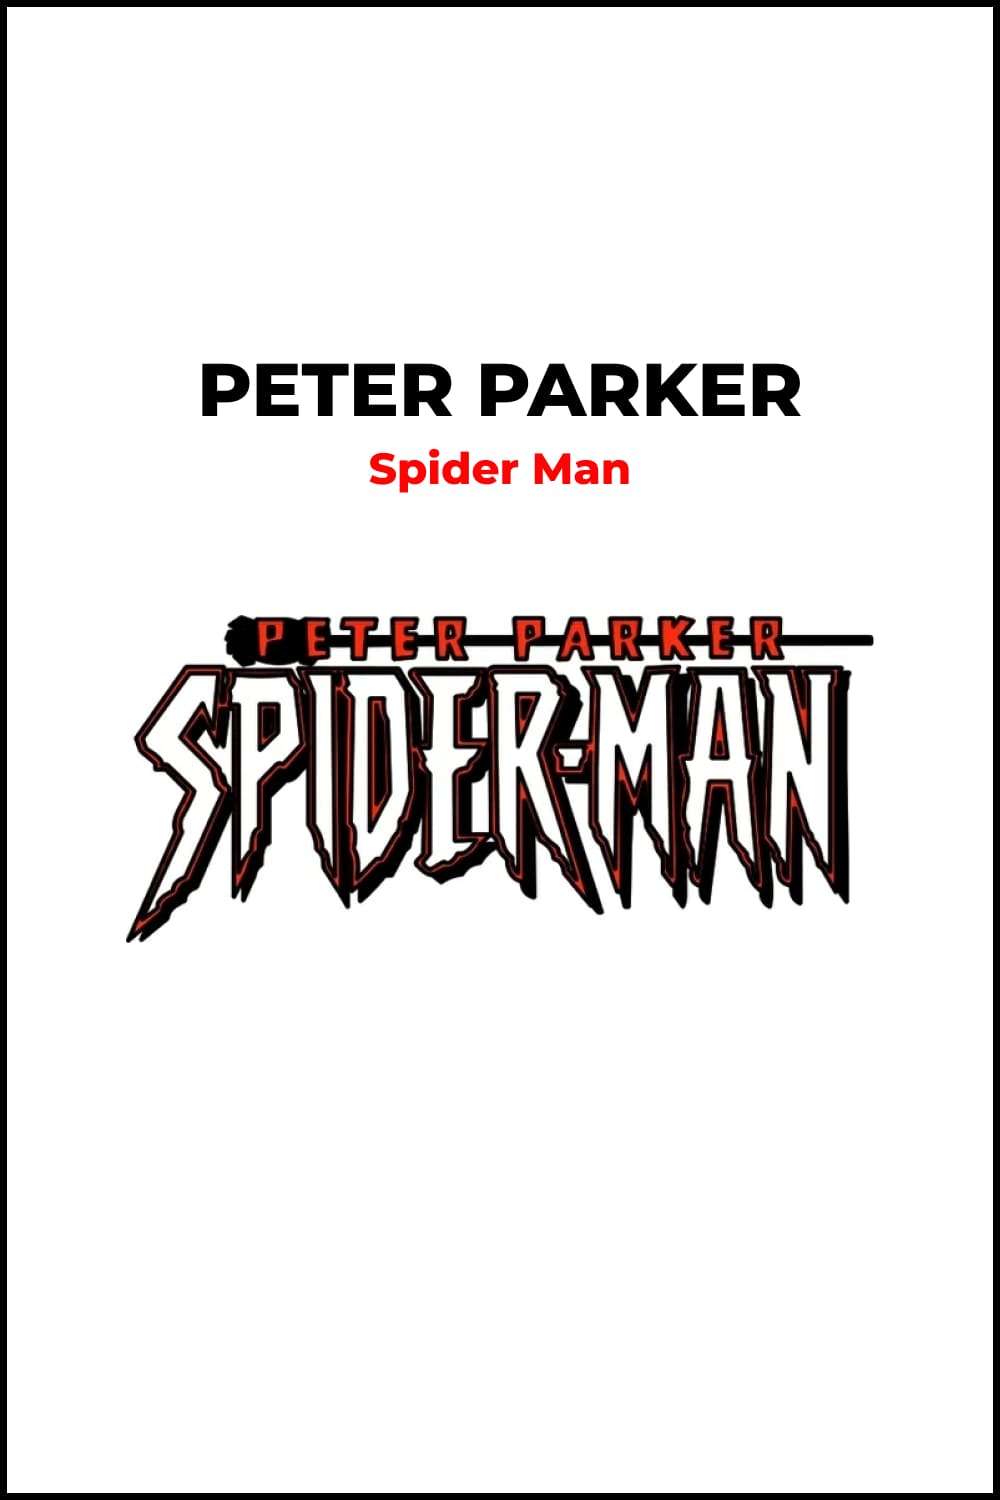 Peter parker spider man Free.